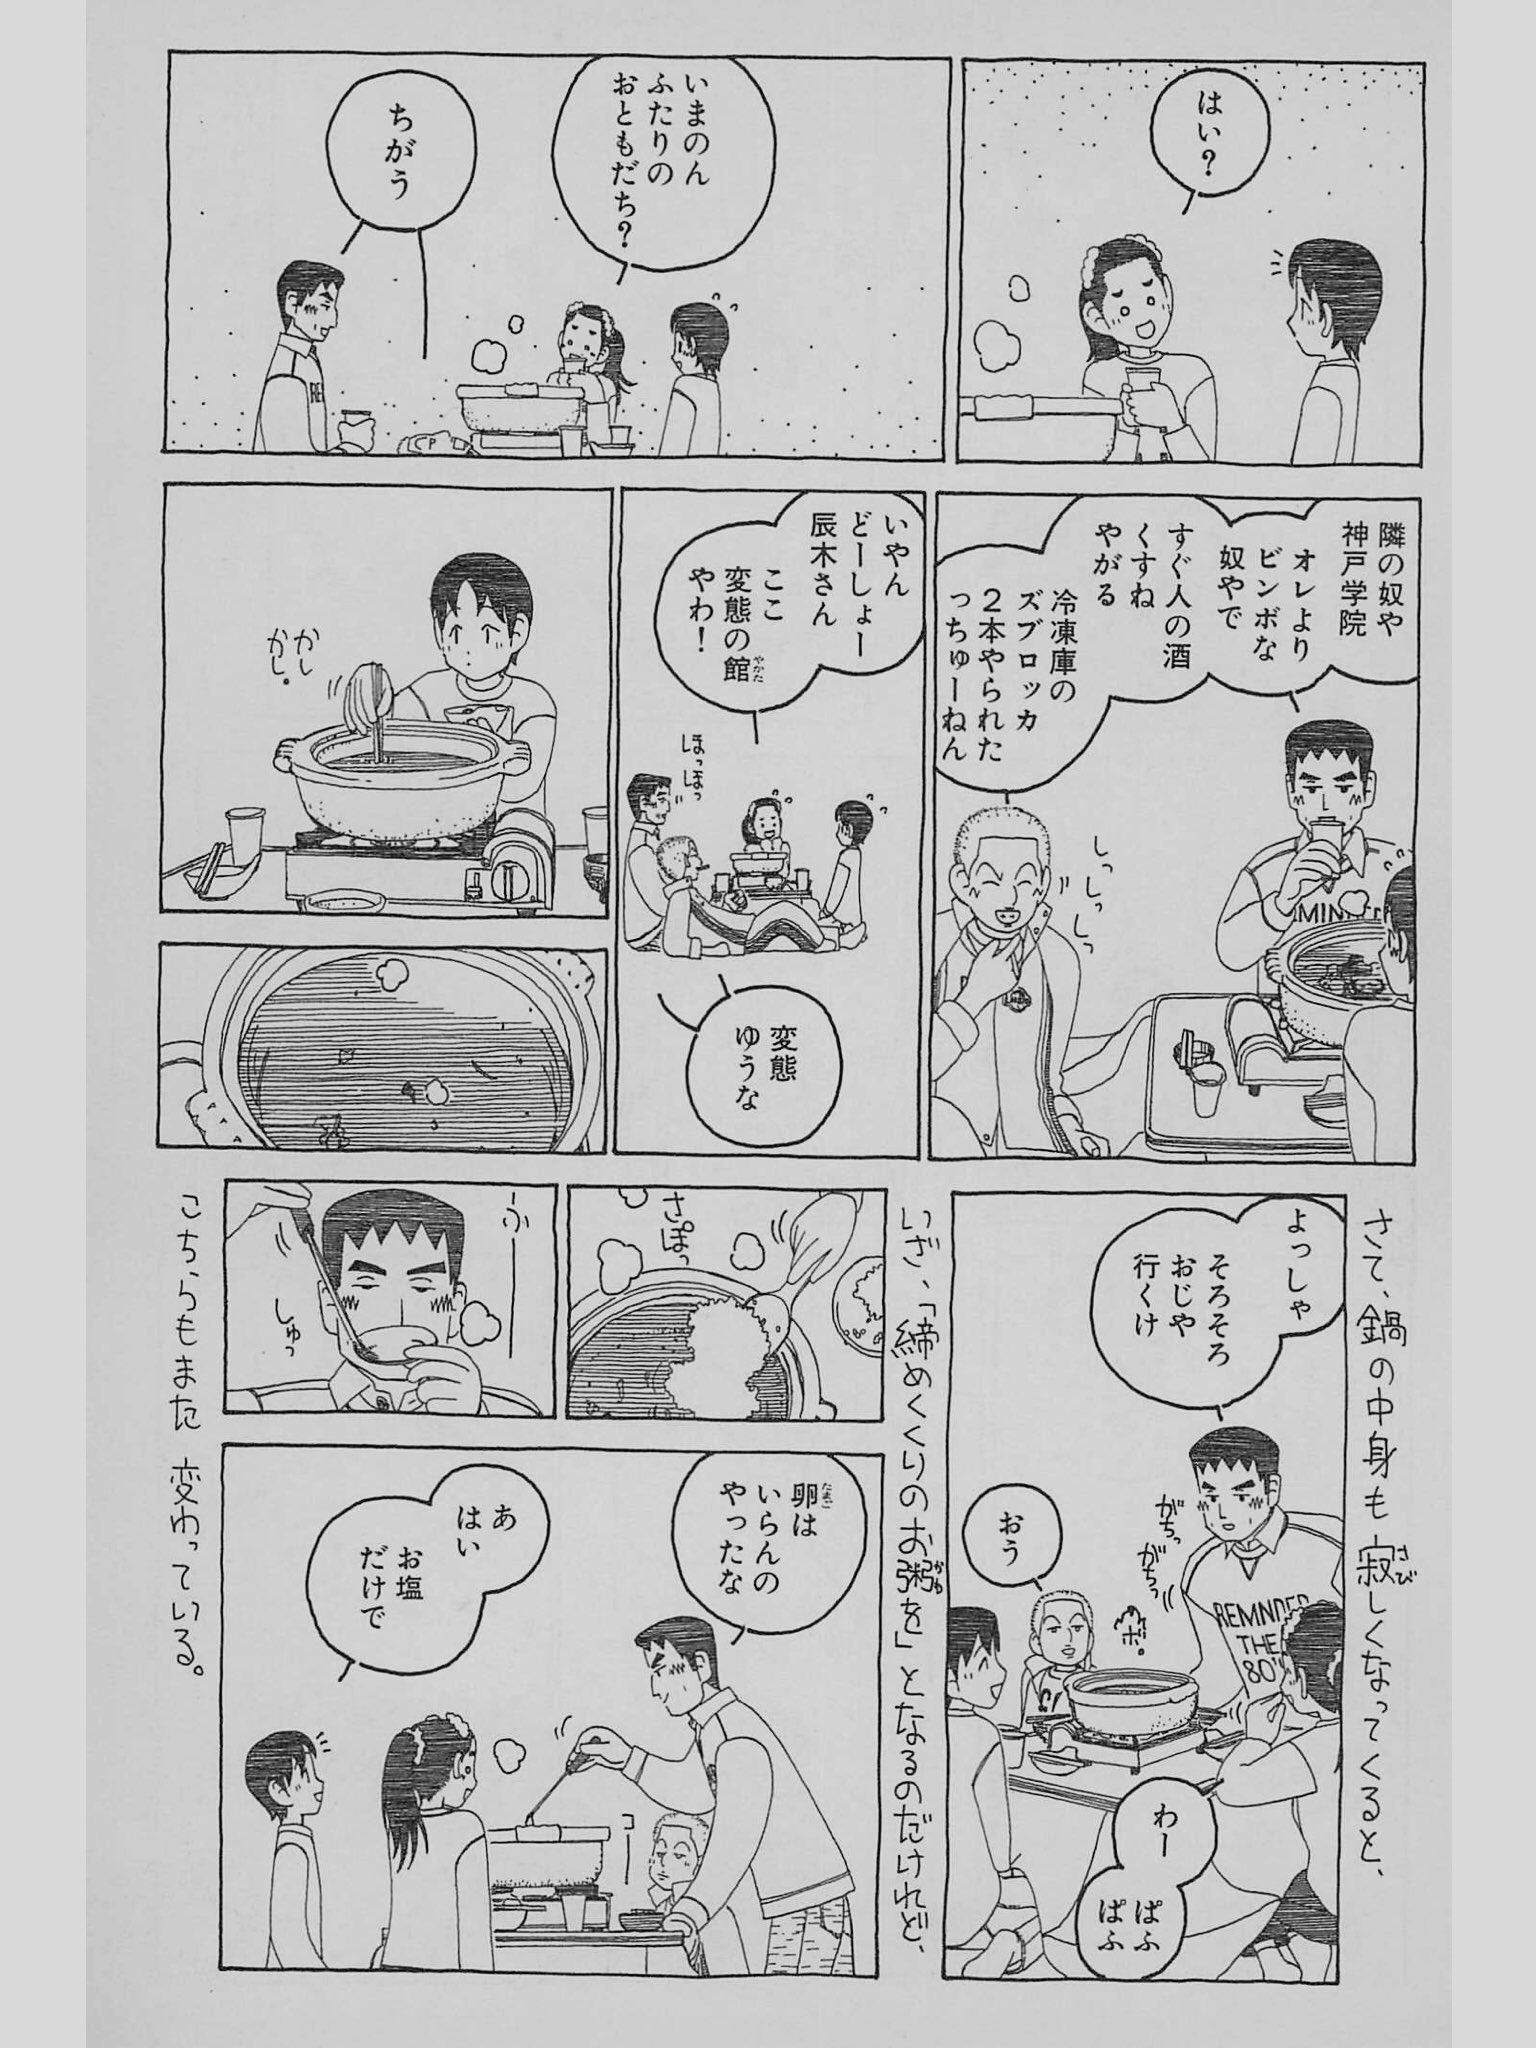 Koujin ピェンローおすすめ 漫画は 神戸在住 原典は 河童のスケッチブック 妹尾河童 シメのべったら漬けはあってもなくてもいい T Co 1enfmx5w8o Twitter